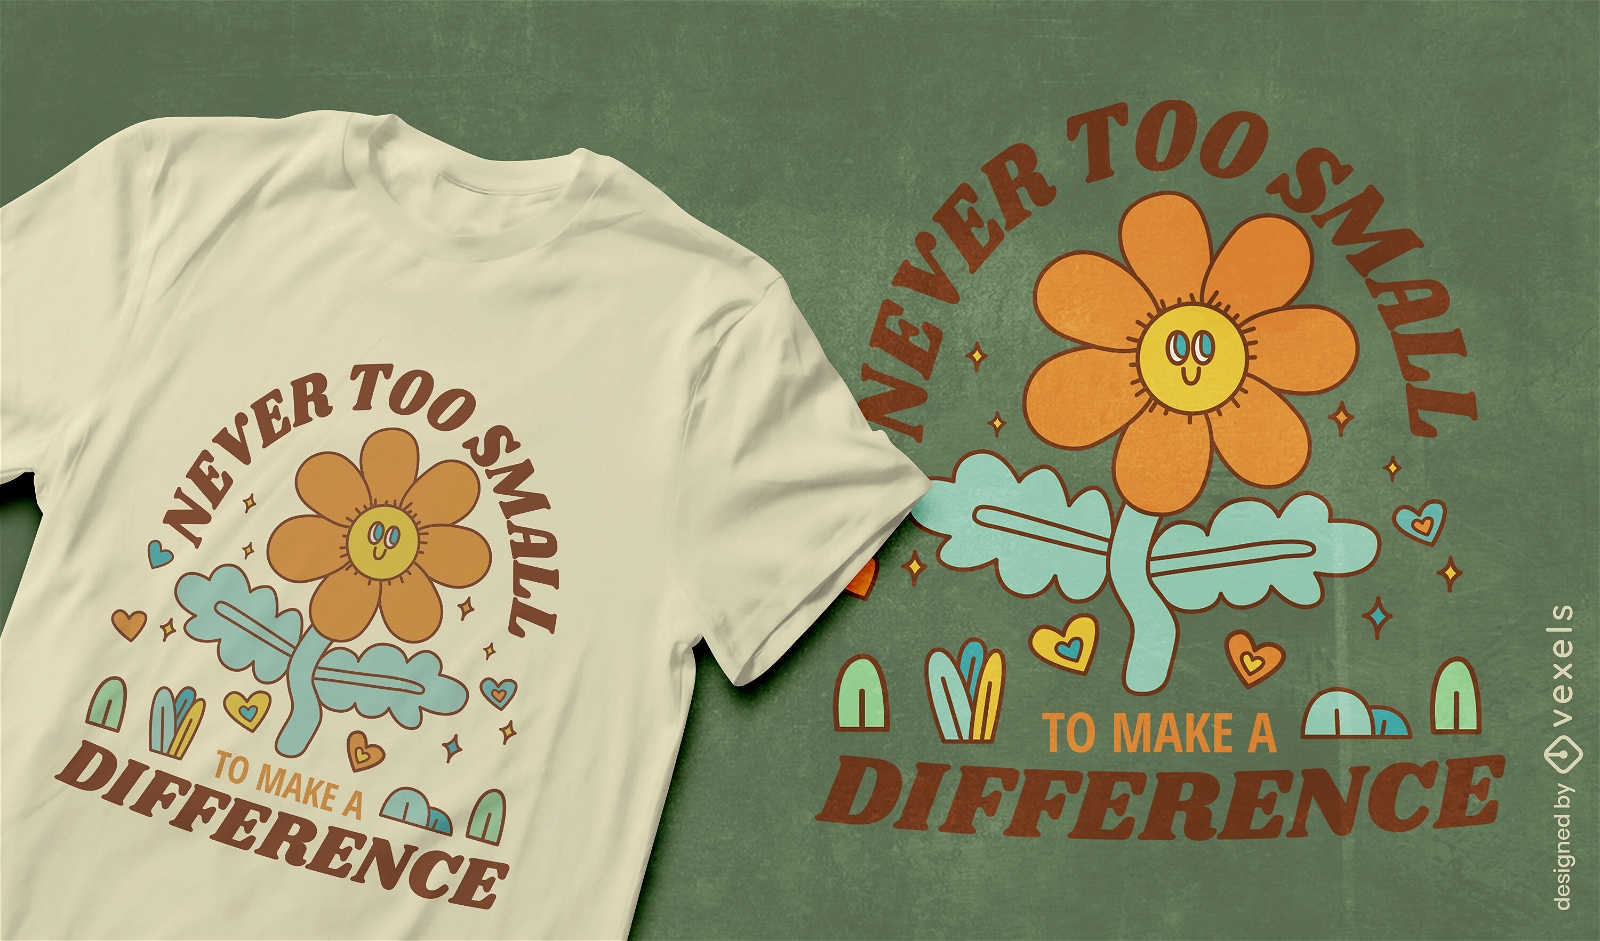 Fa?a a diferen?a design de camiseta do Dia da Terra